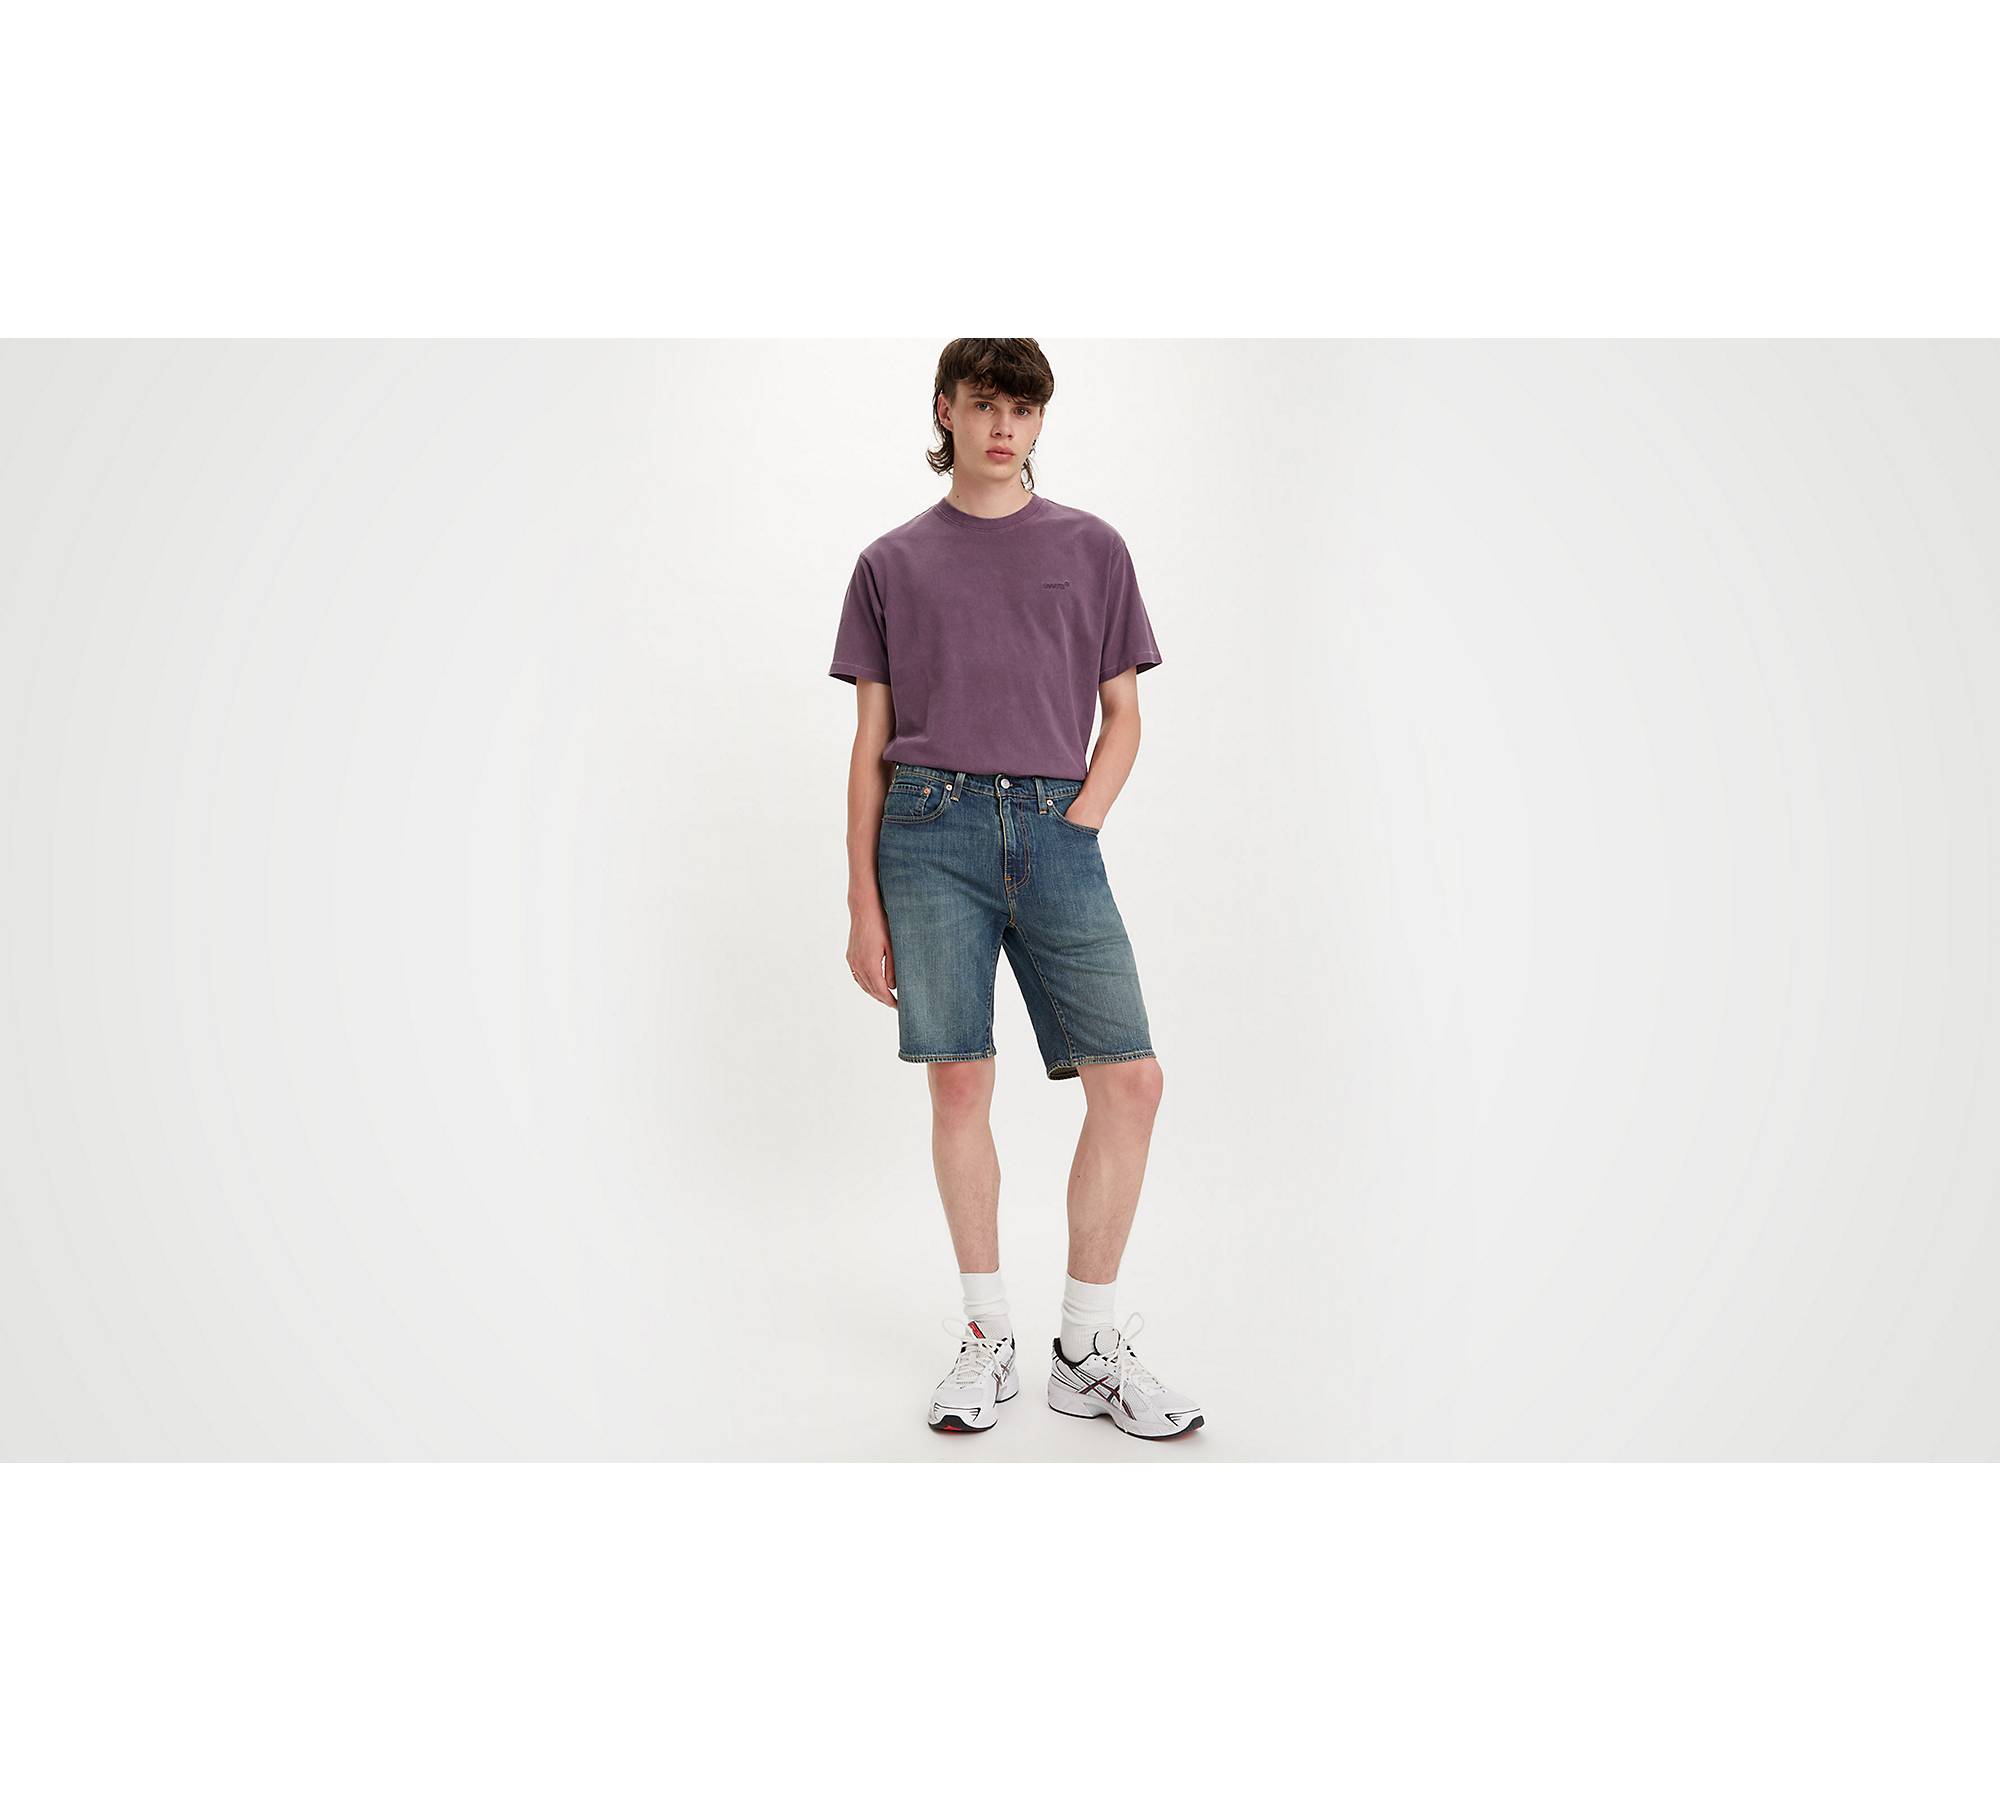 Levi's 405 Standard Denim Men's Shorts - Real Calling 29 x 10